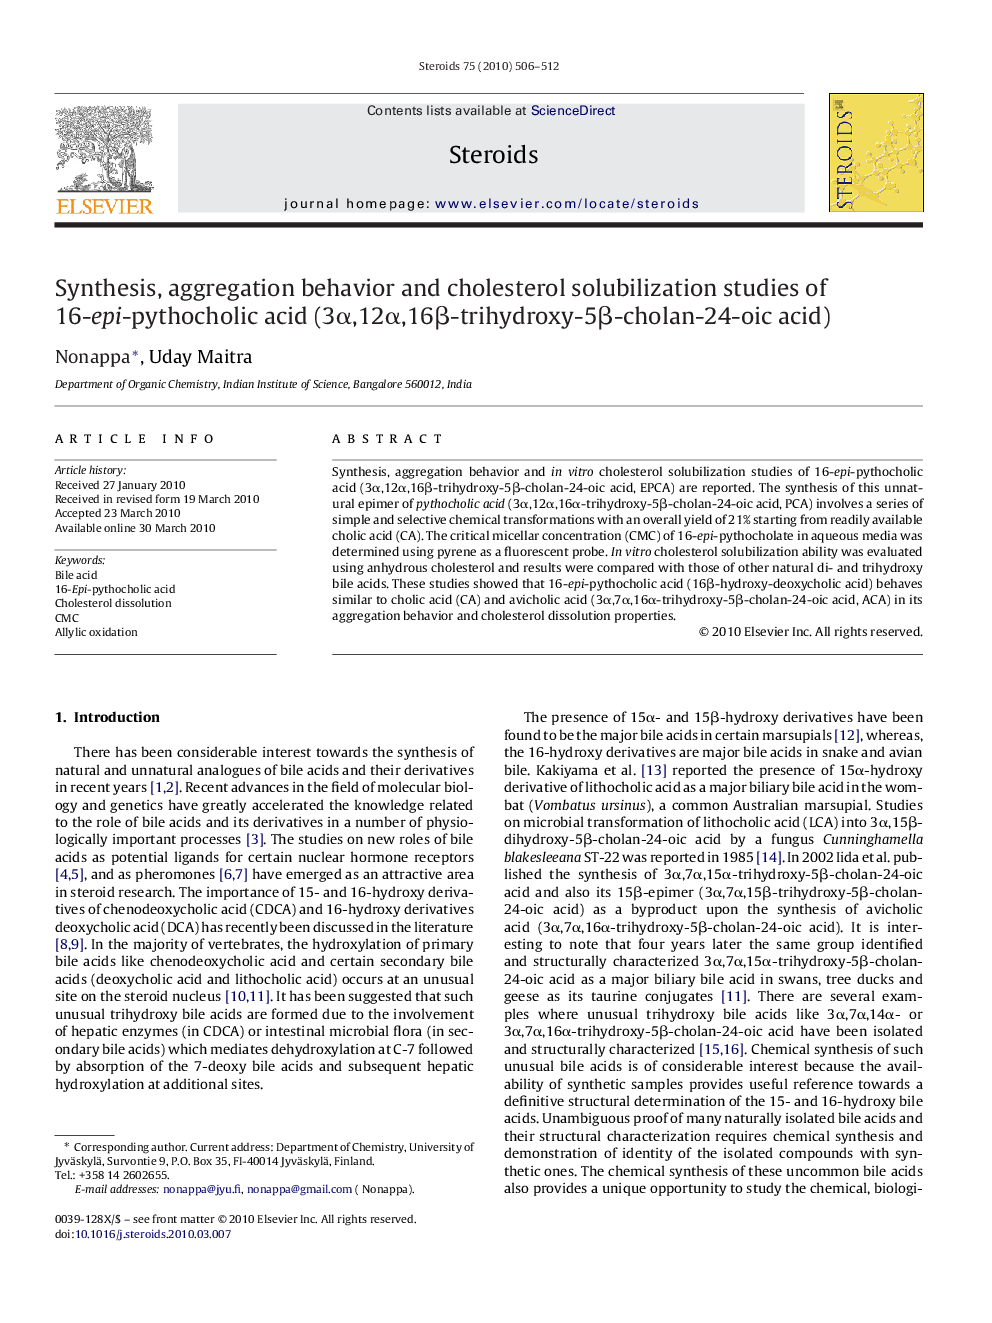 Synthesis, aggregation behavior and cholesterol solubilization studies of 16-epi-pythocholic acid (3α,12α,16β-trihydroxy-5β-cholan-24-oic acid)